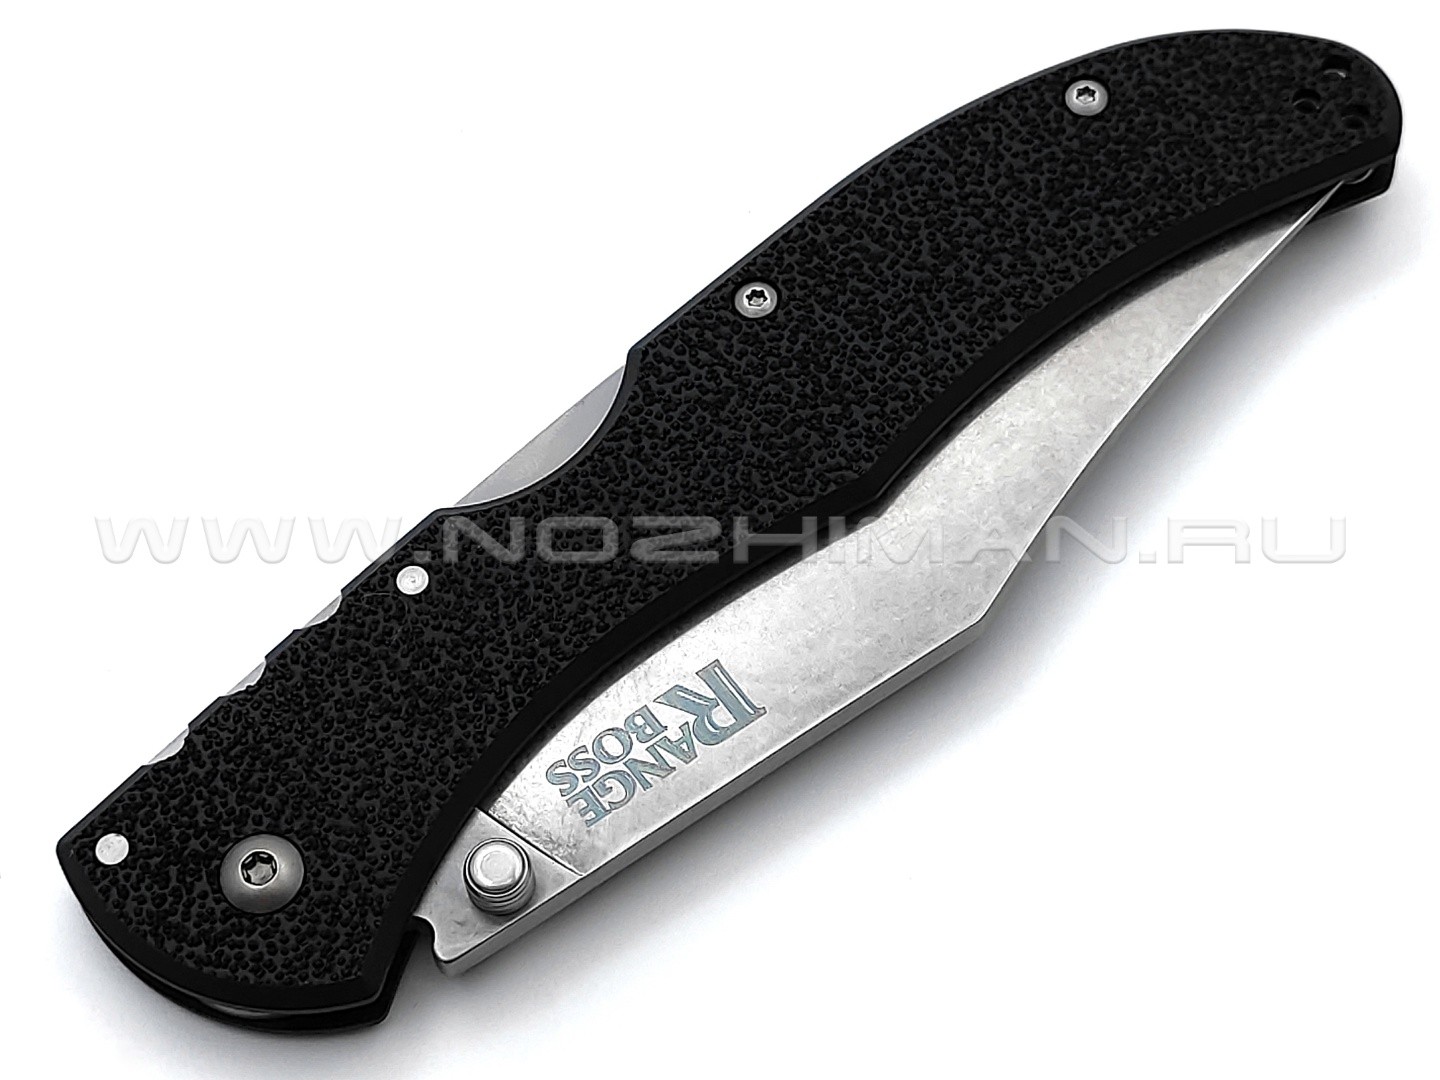 Cold Steel нож Range Boss 20KR5 Black Handle сталь 4034SS, рукоять Zy-Ex